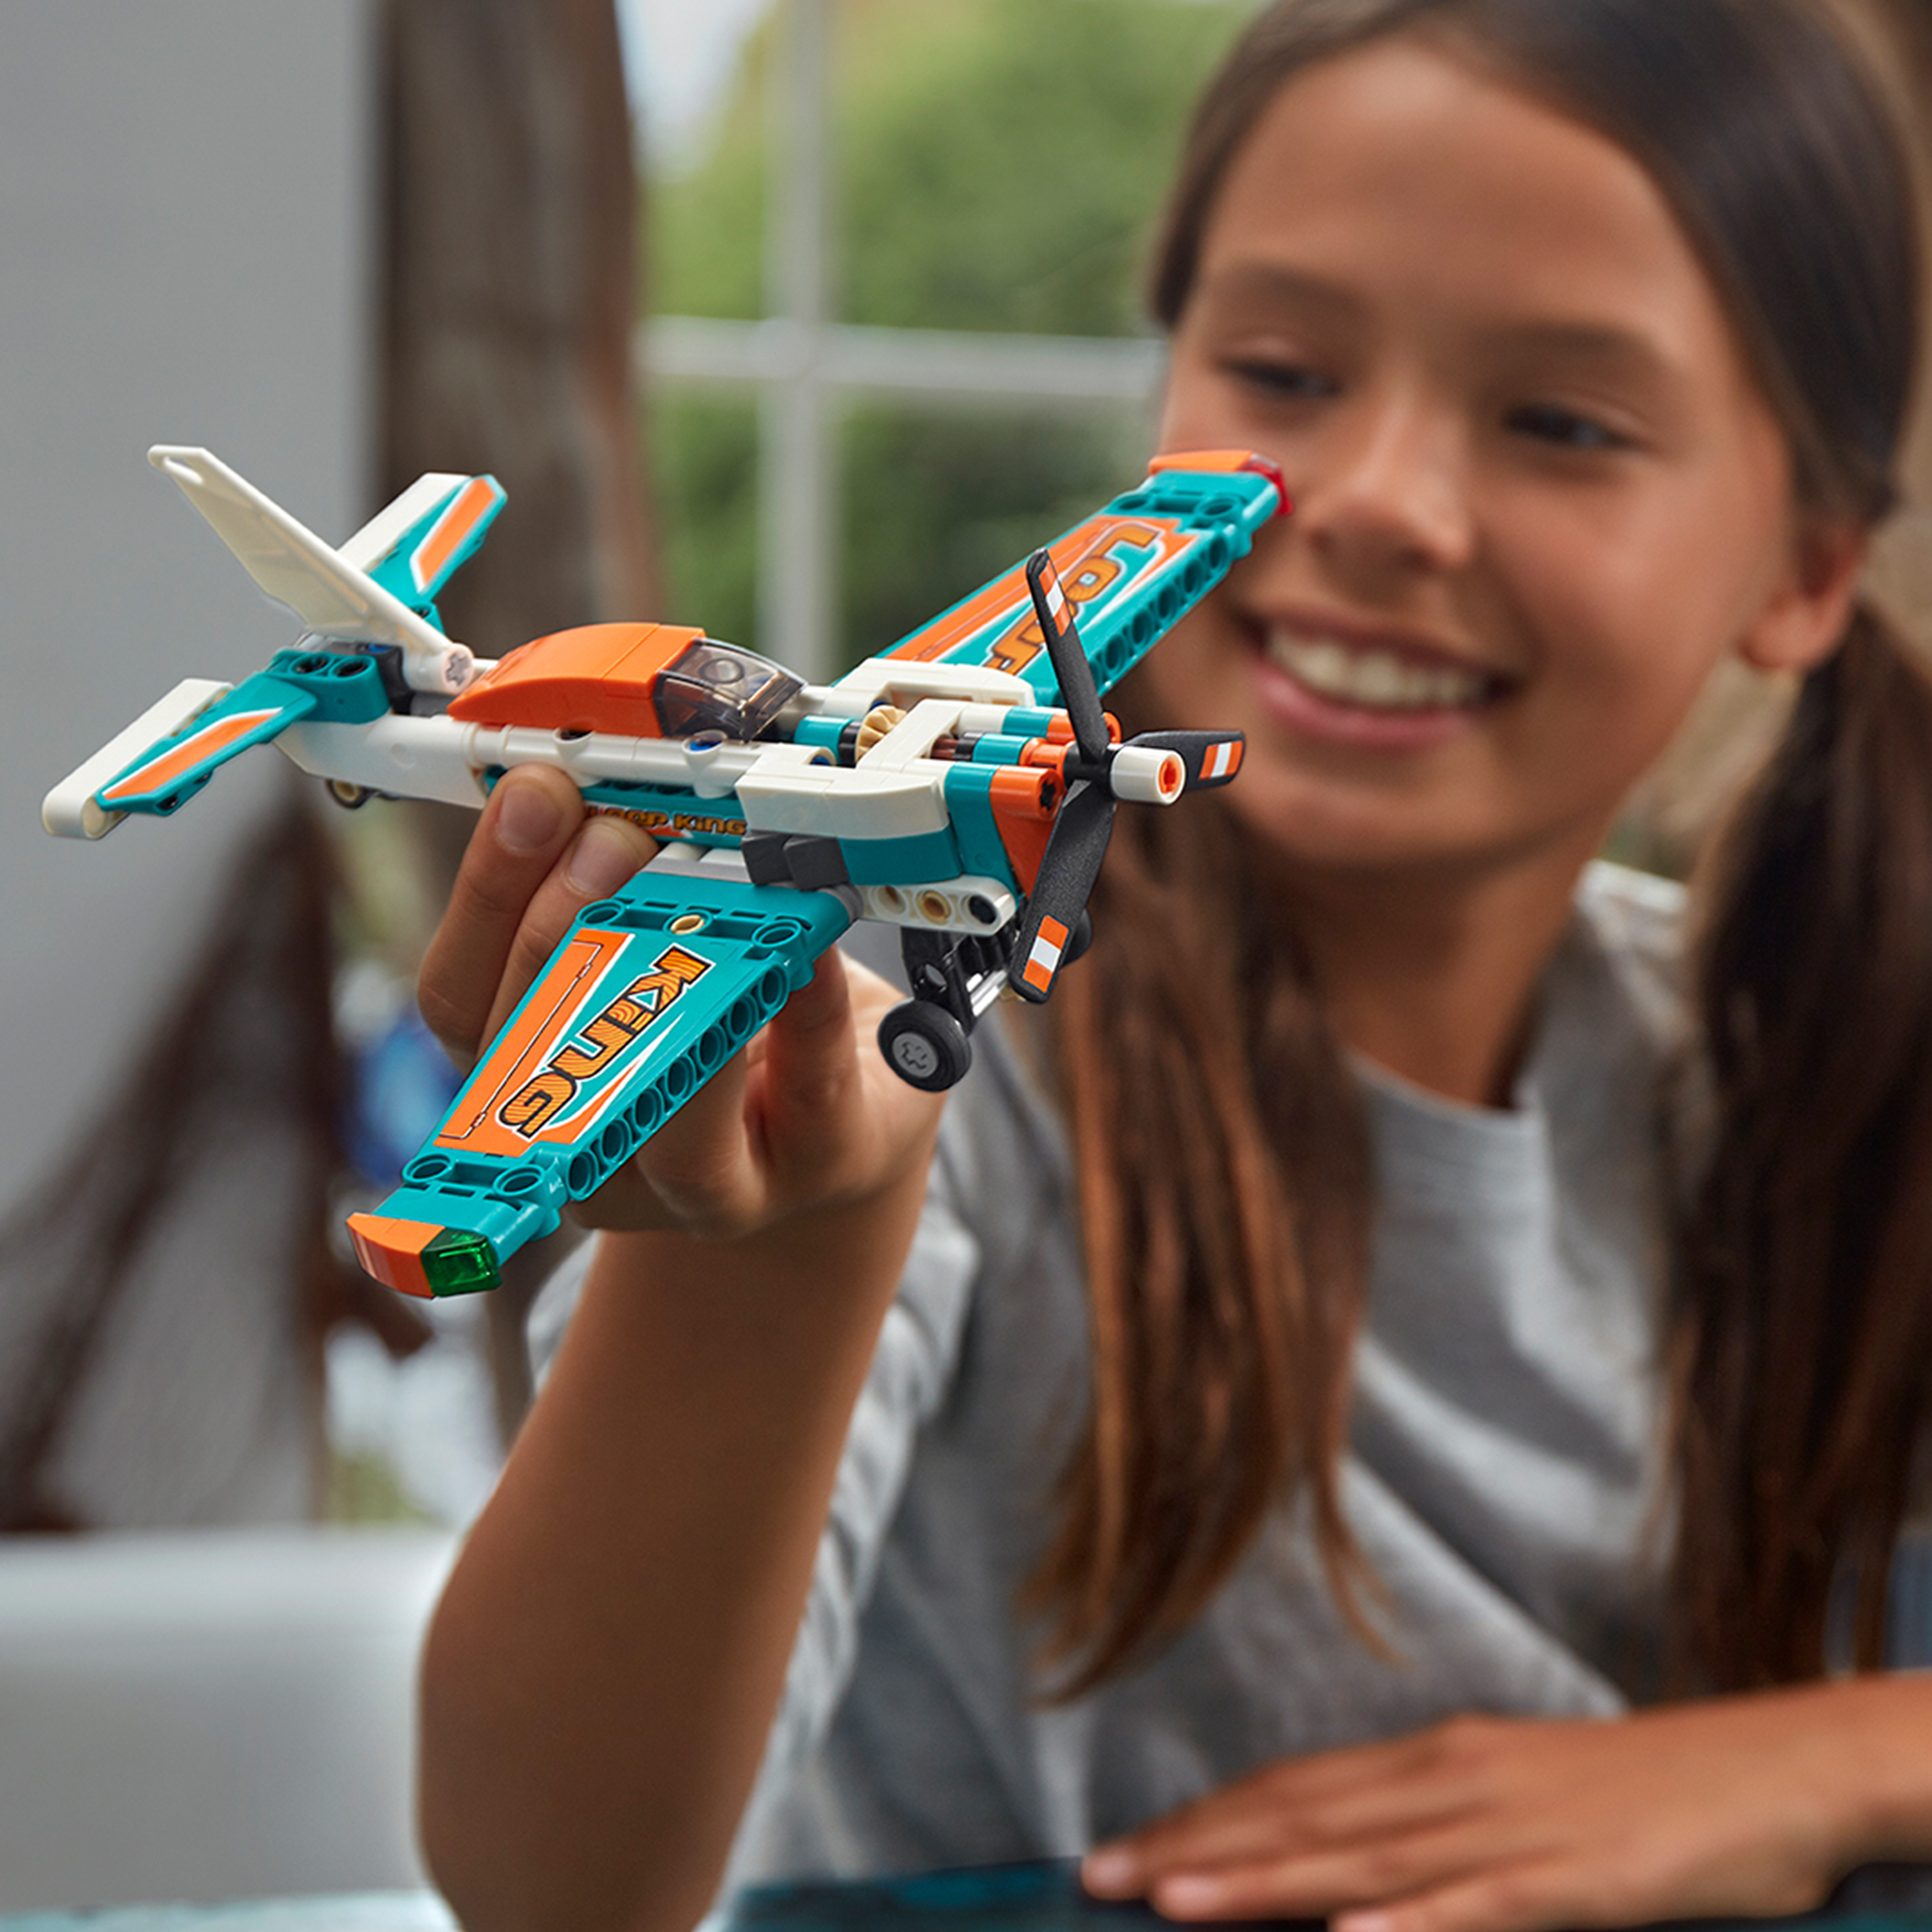 LEGO Technic 42117 Mehrfarbig Bausatz, Rennflugzeug